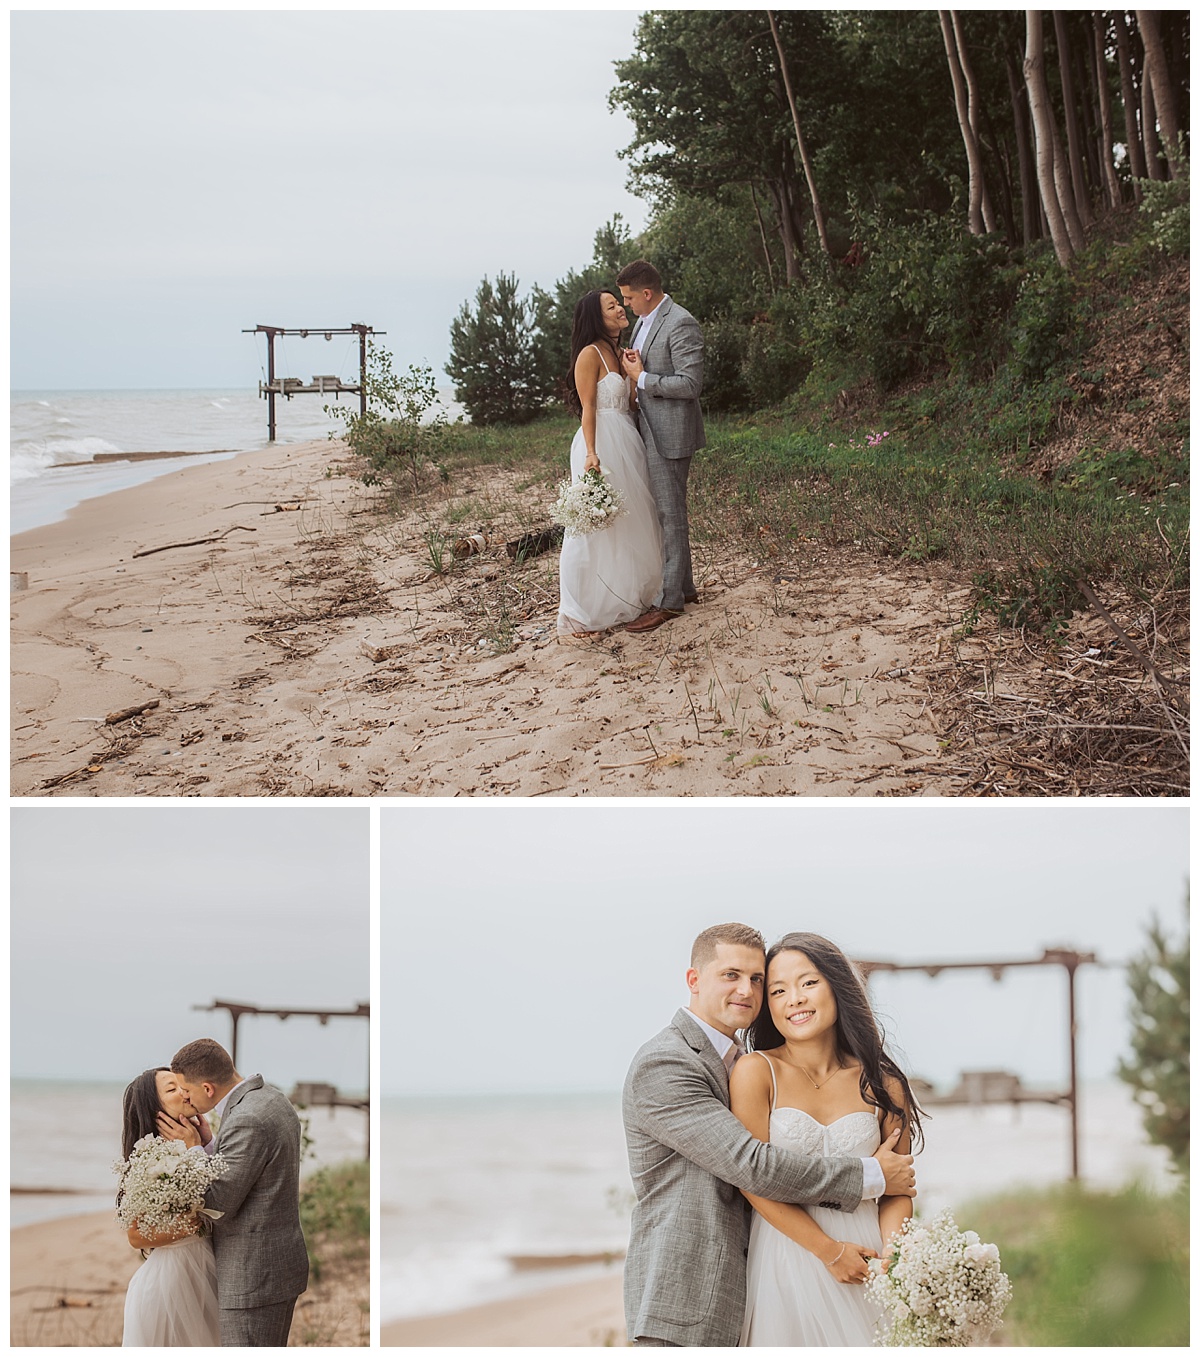 LExington Michigan beach wedding, Port Huron MIchigan wedding, Groom detail, Bride abnd groom on beach